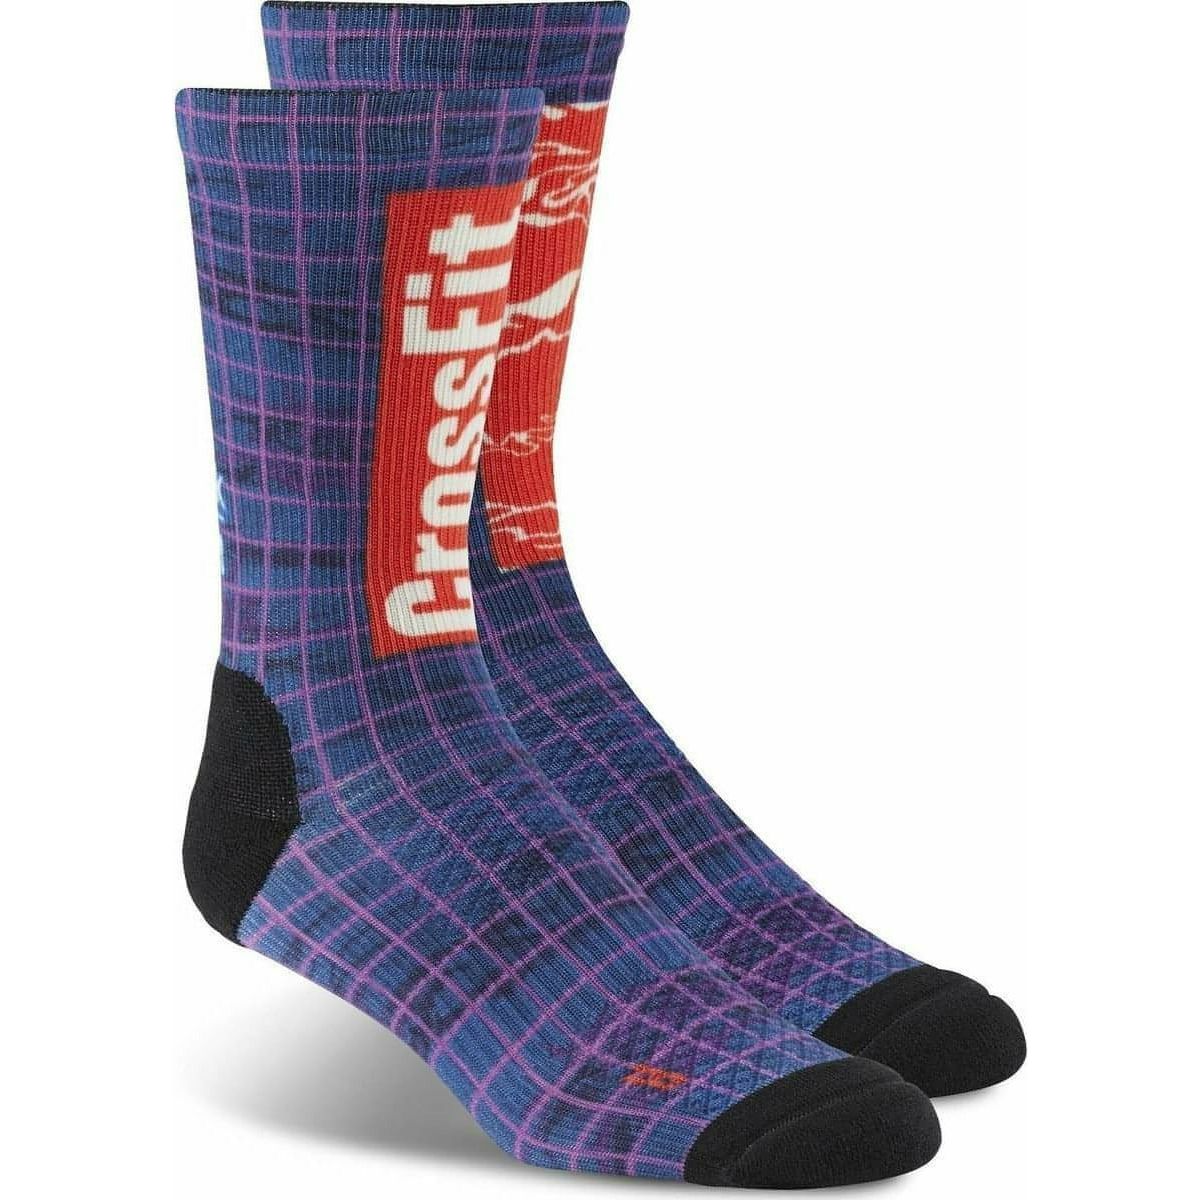 Reebok Crossfit Socks Cd1164 D